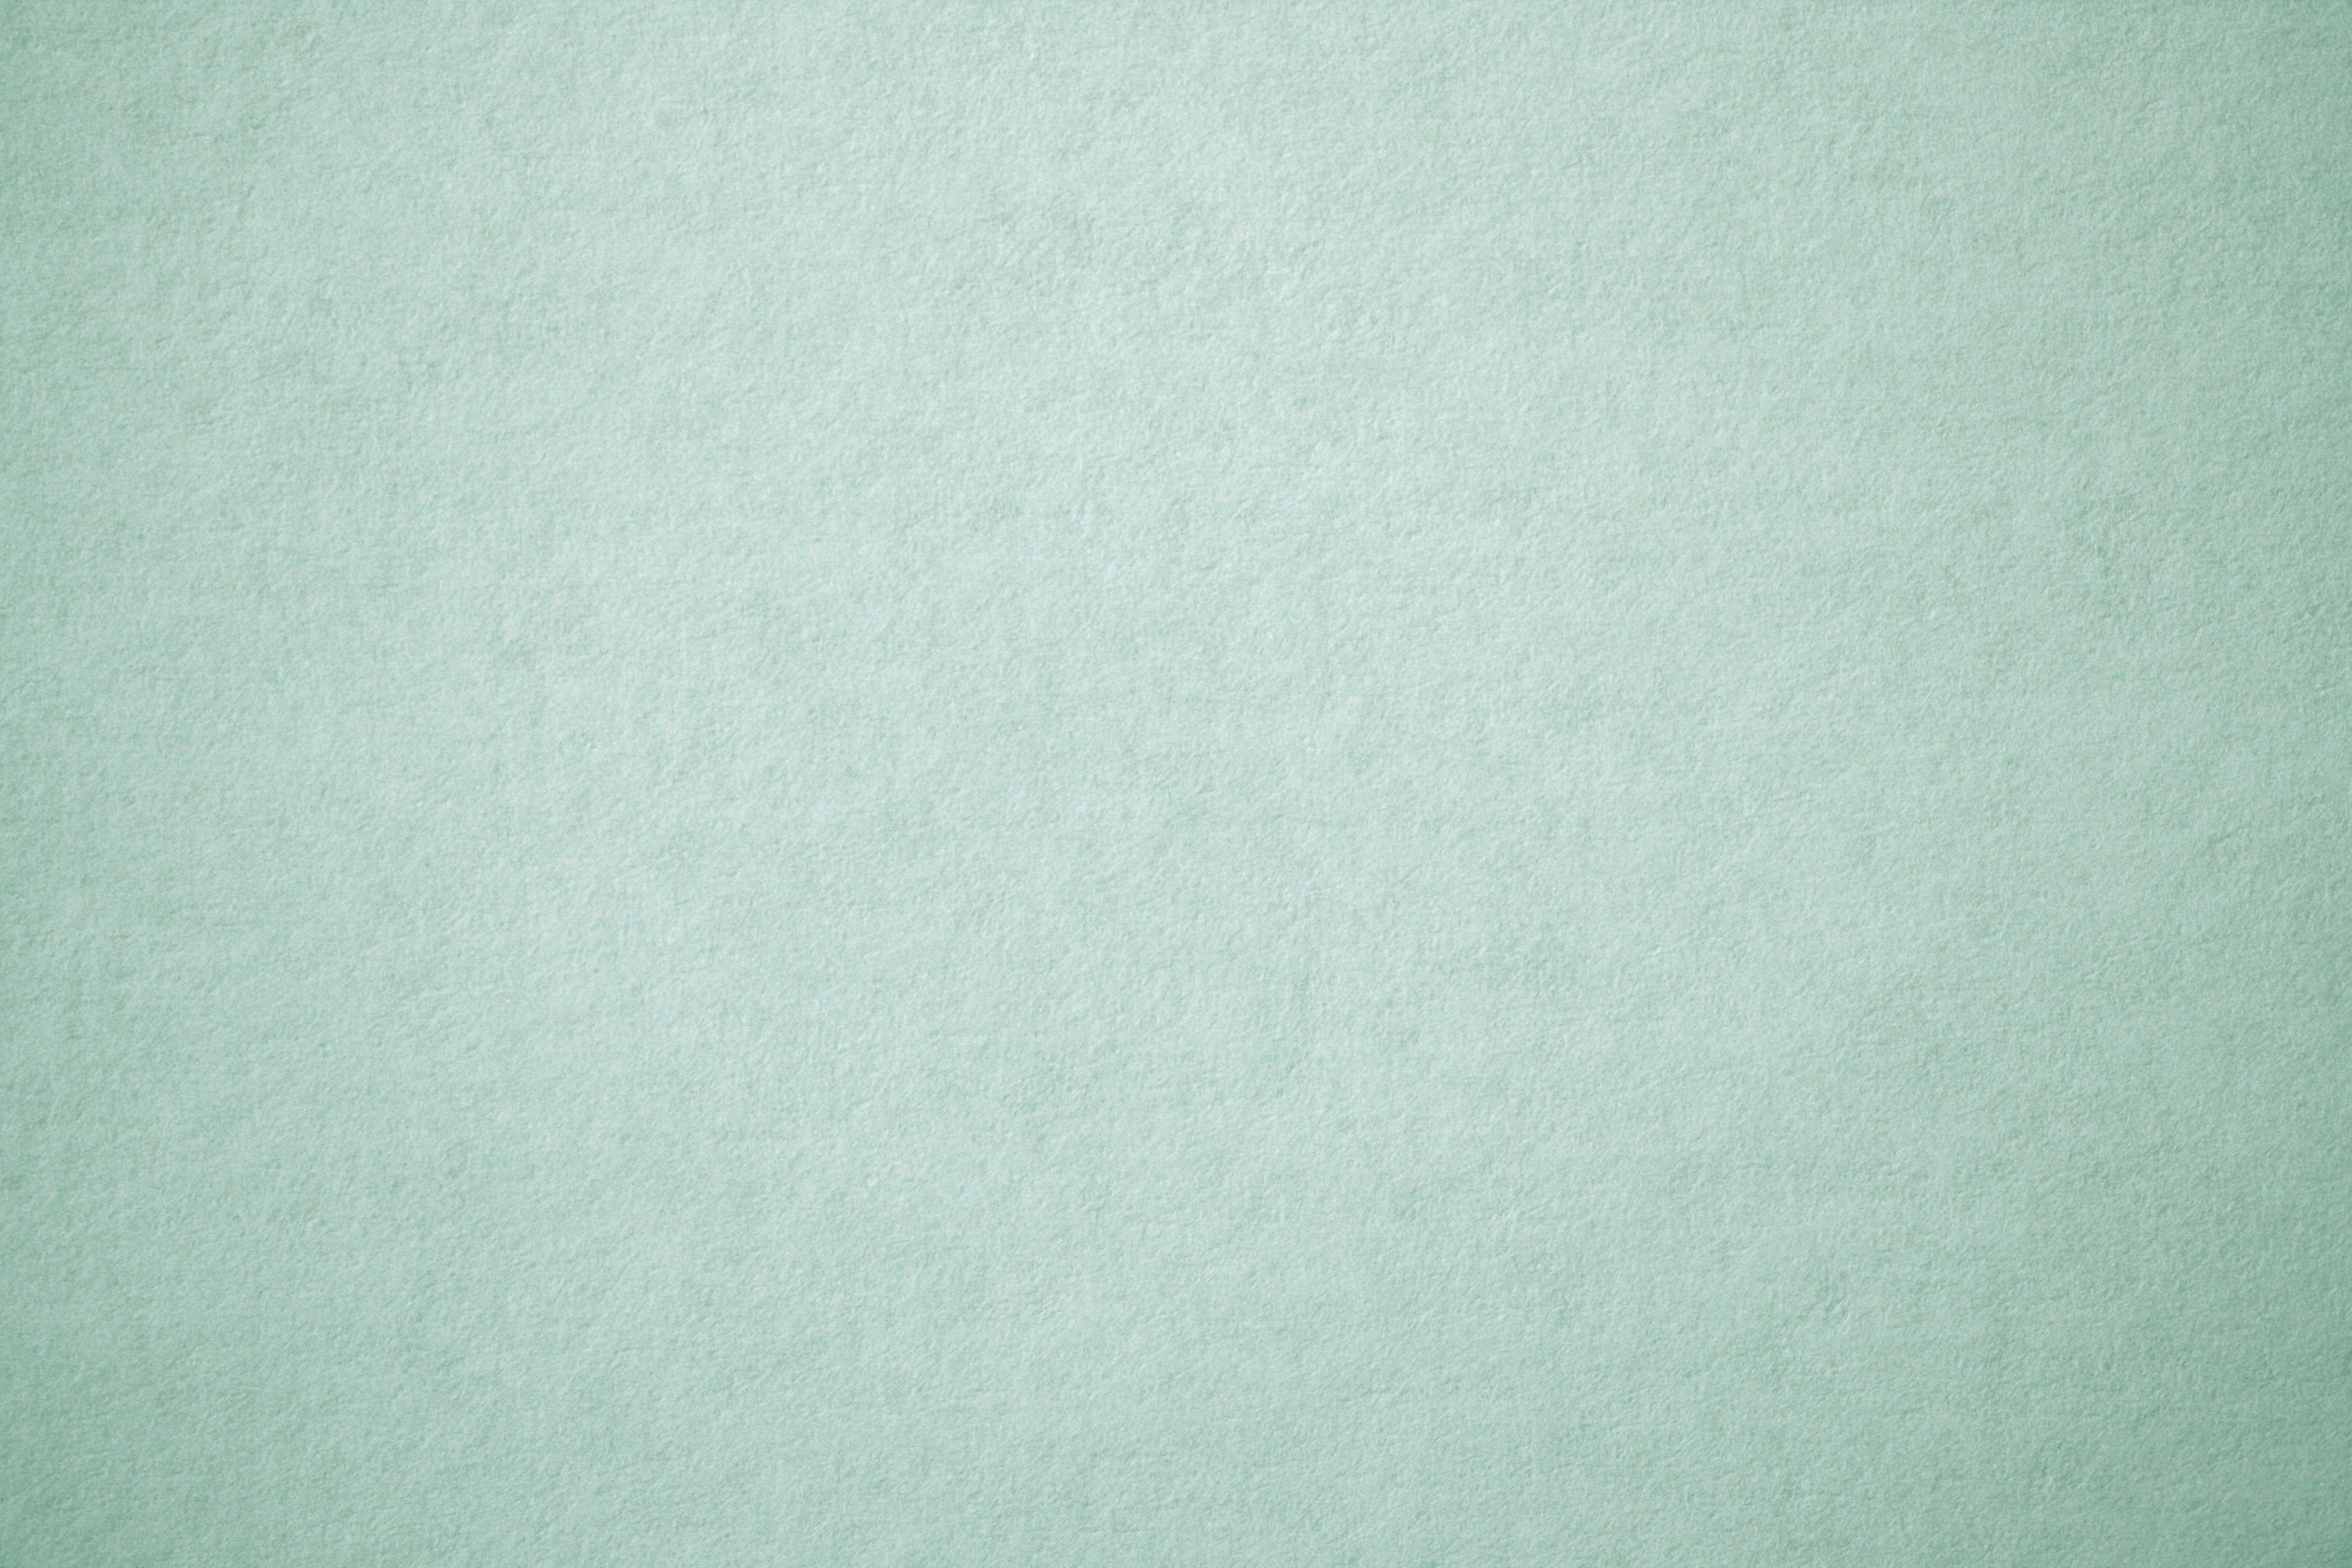 Sage Green Paper Texture Picture | Free Photograph | Photos Public ...